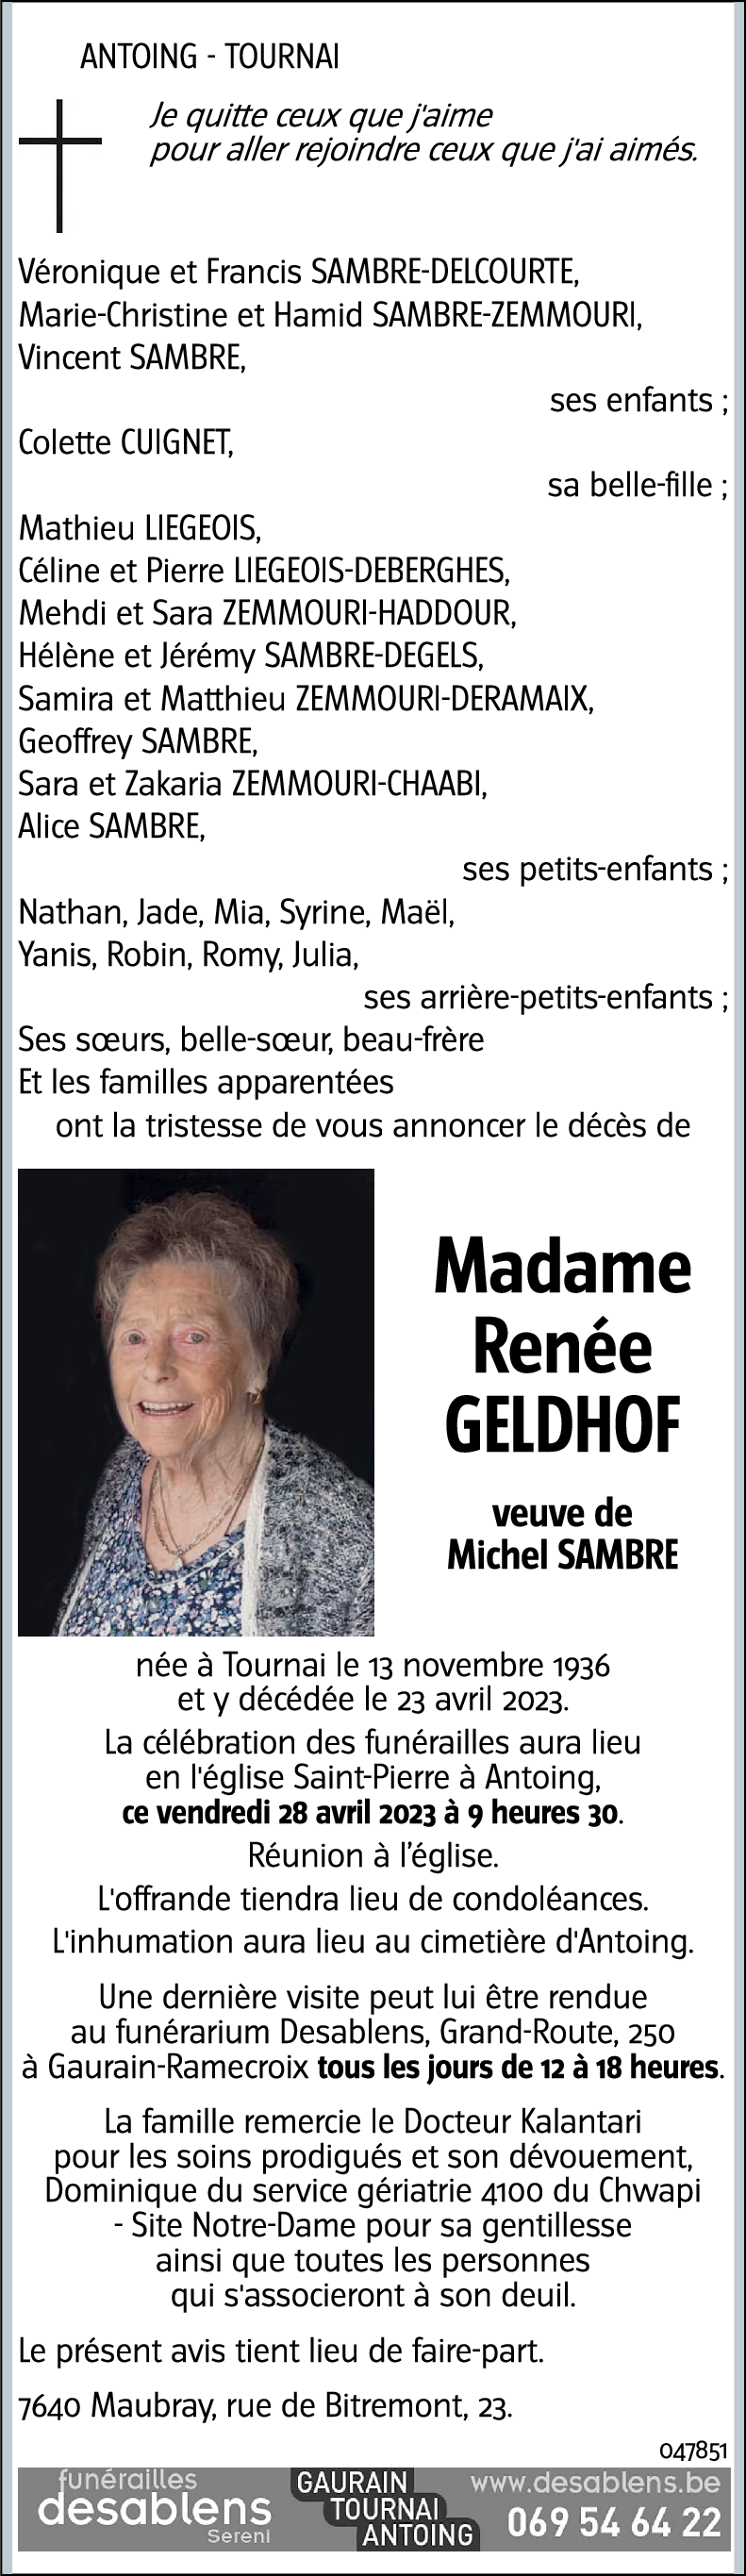 Renée GELDHOF